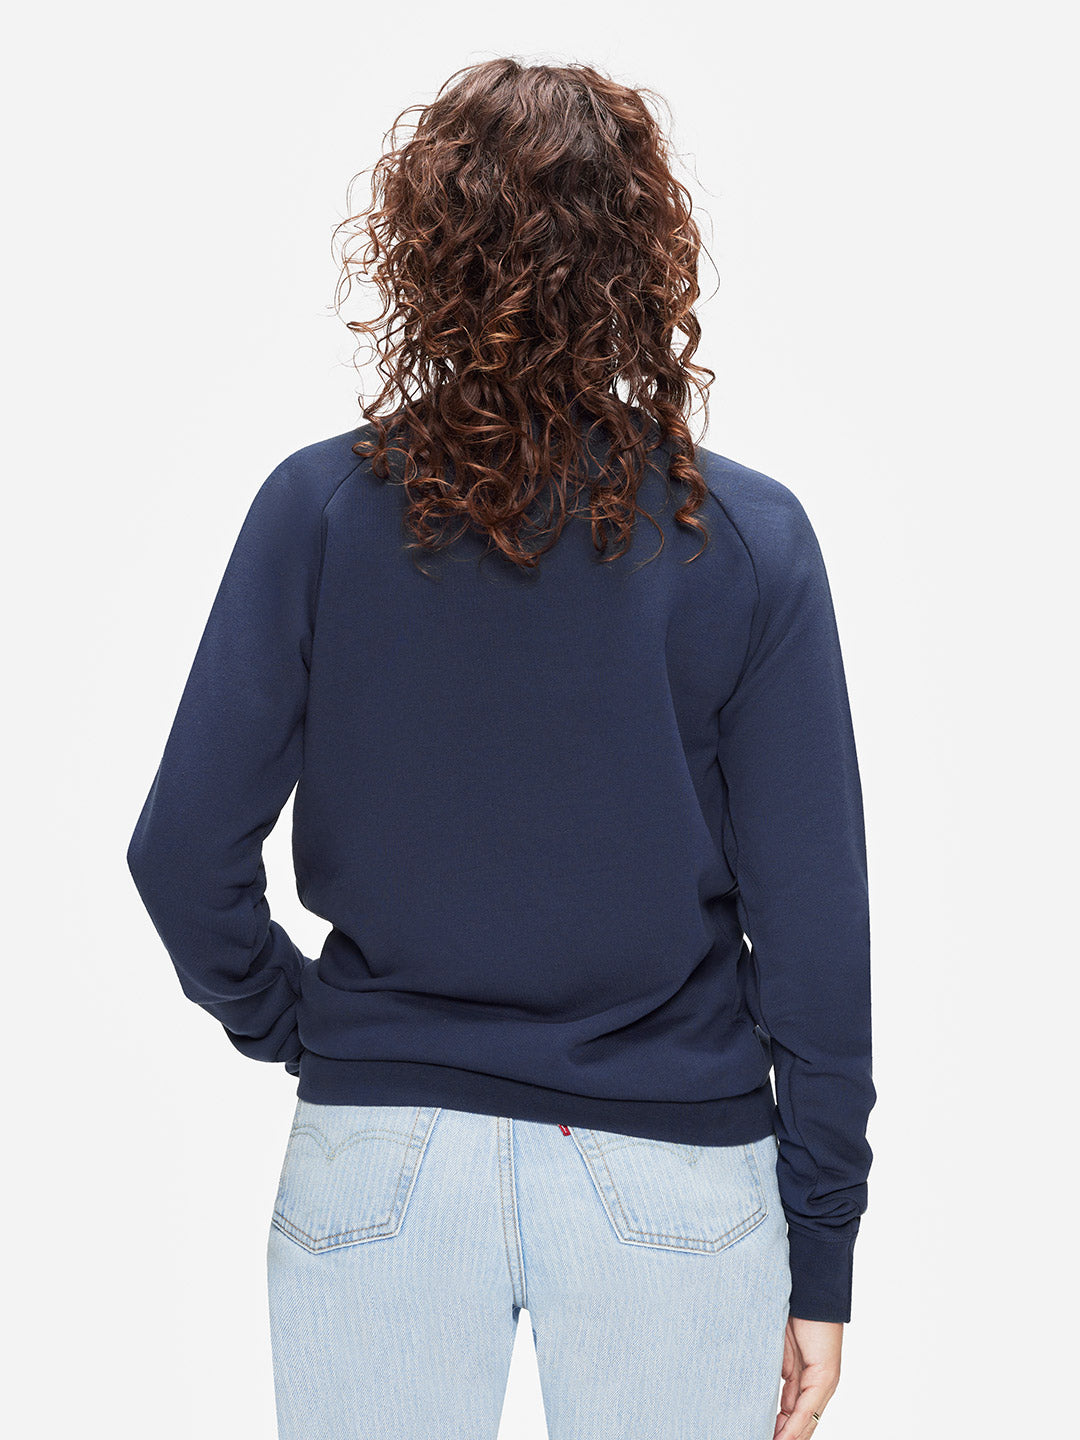 Pedaleur de Charme - Navy - Women's Sweatshirt